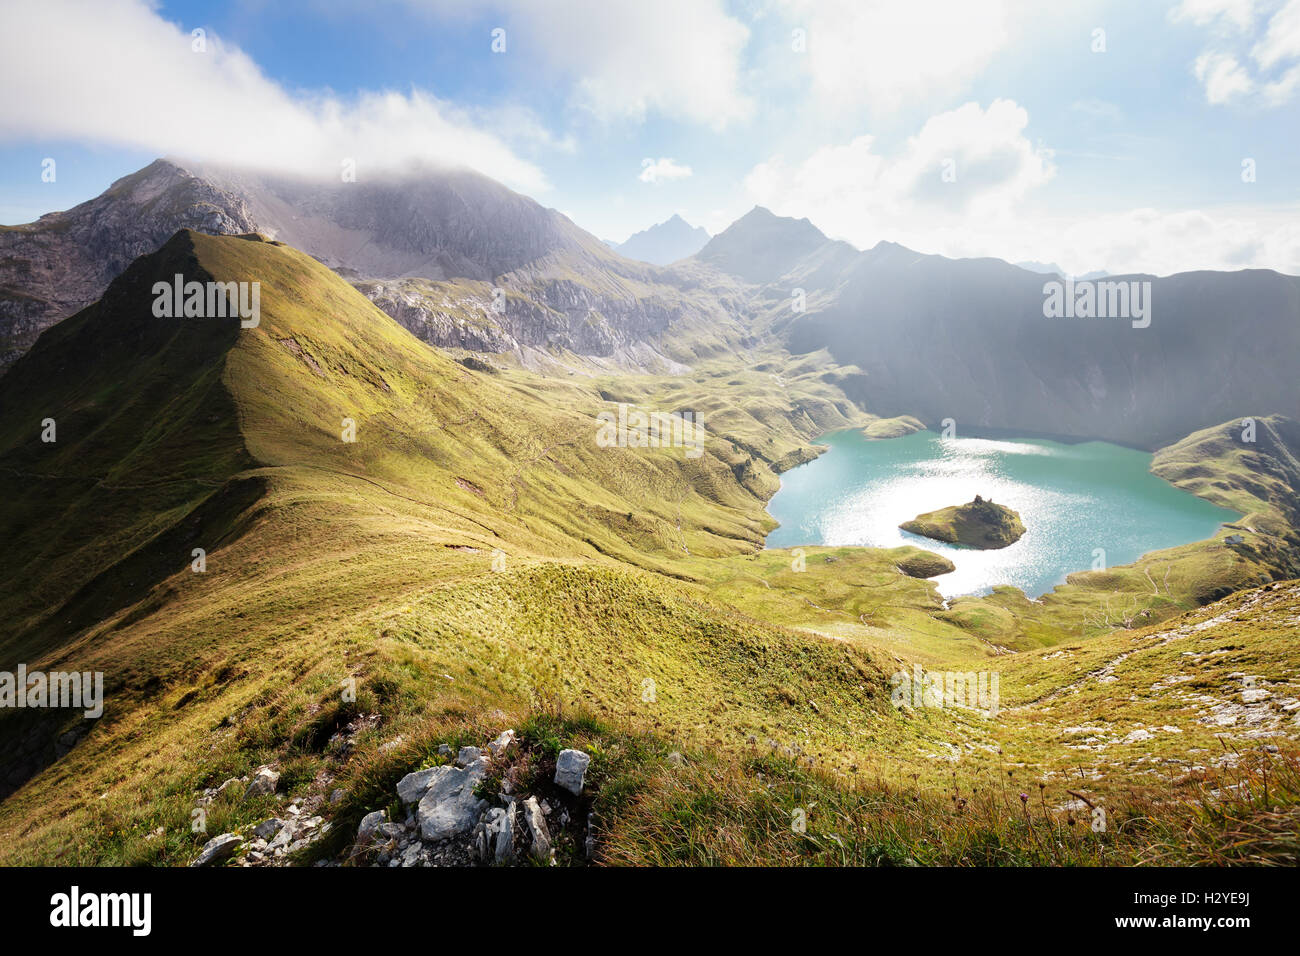 Schrecksee alpine lake in sunshine, Germany Stock Photo